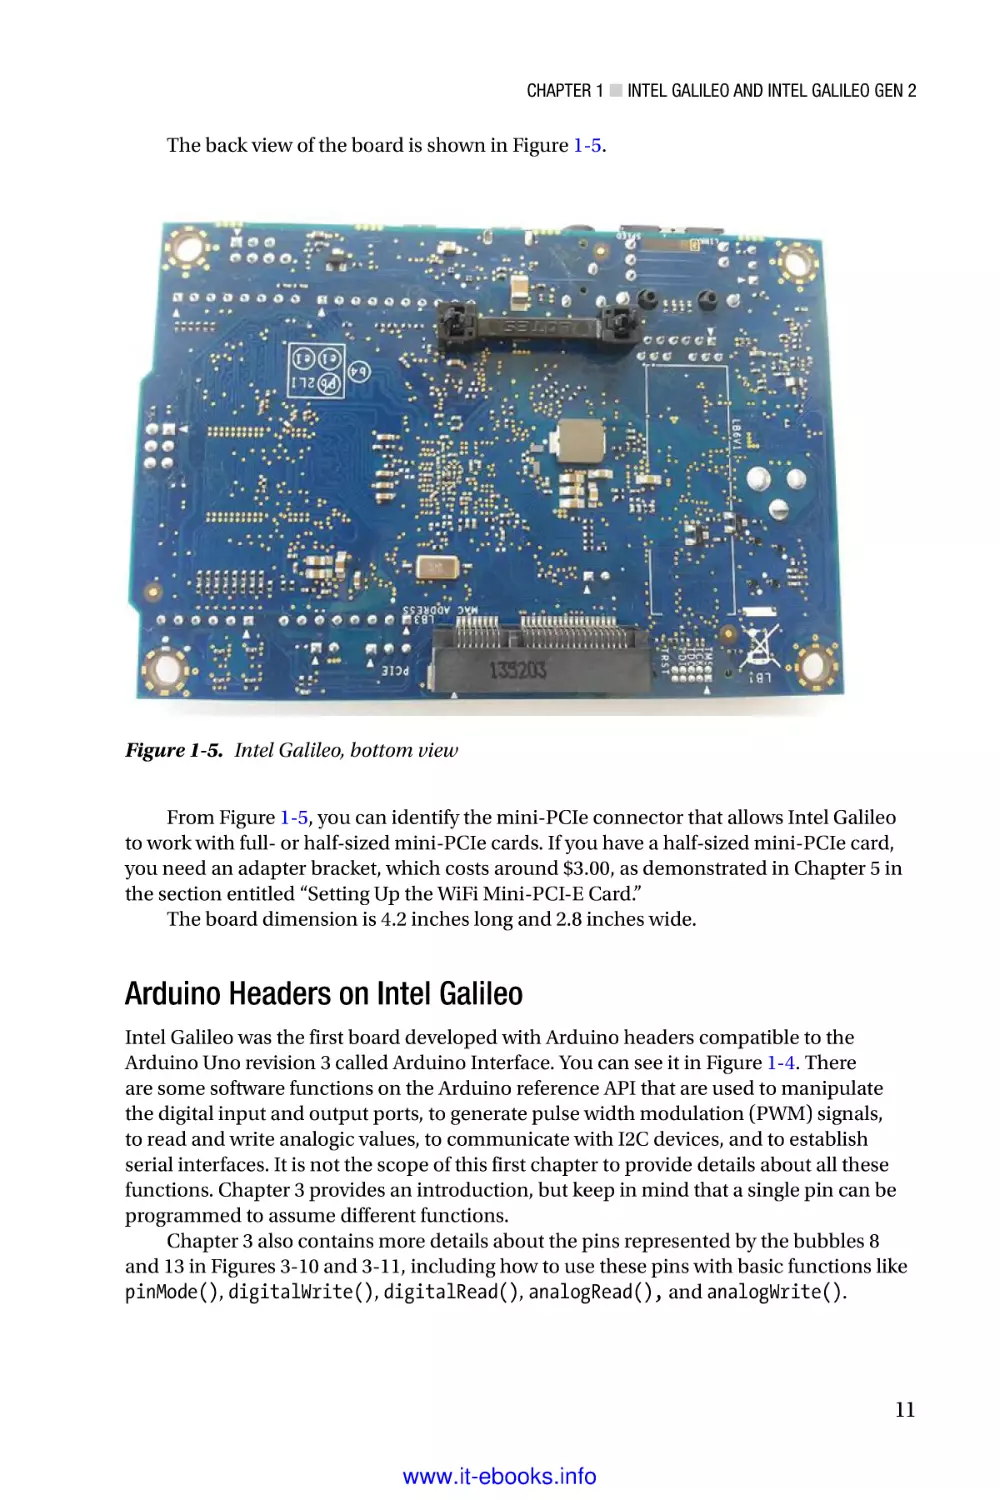 Arduino Headers on Intel Galileo